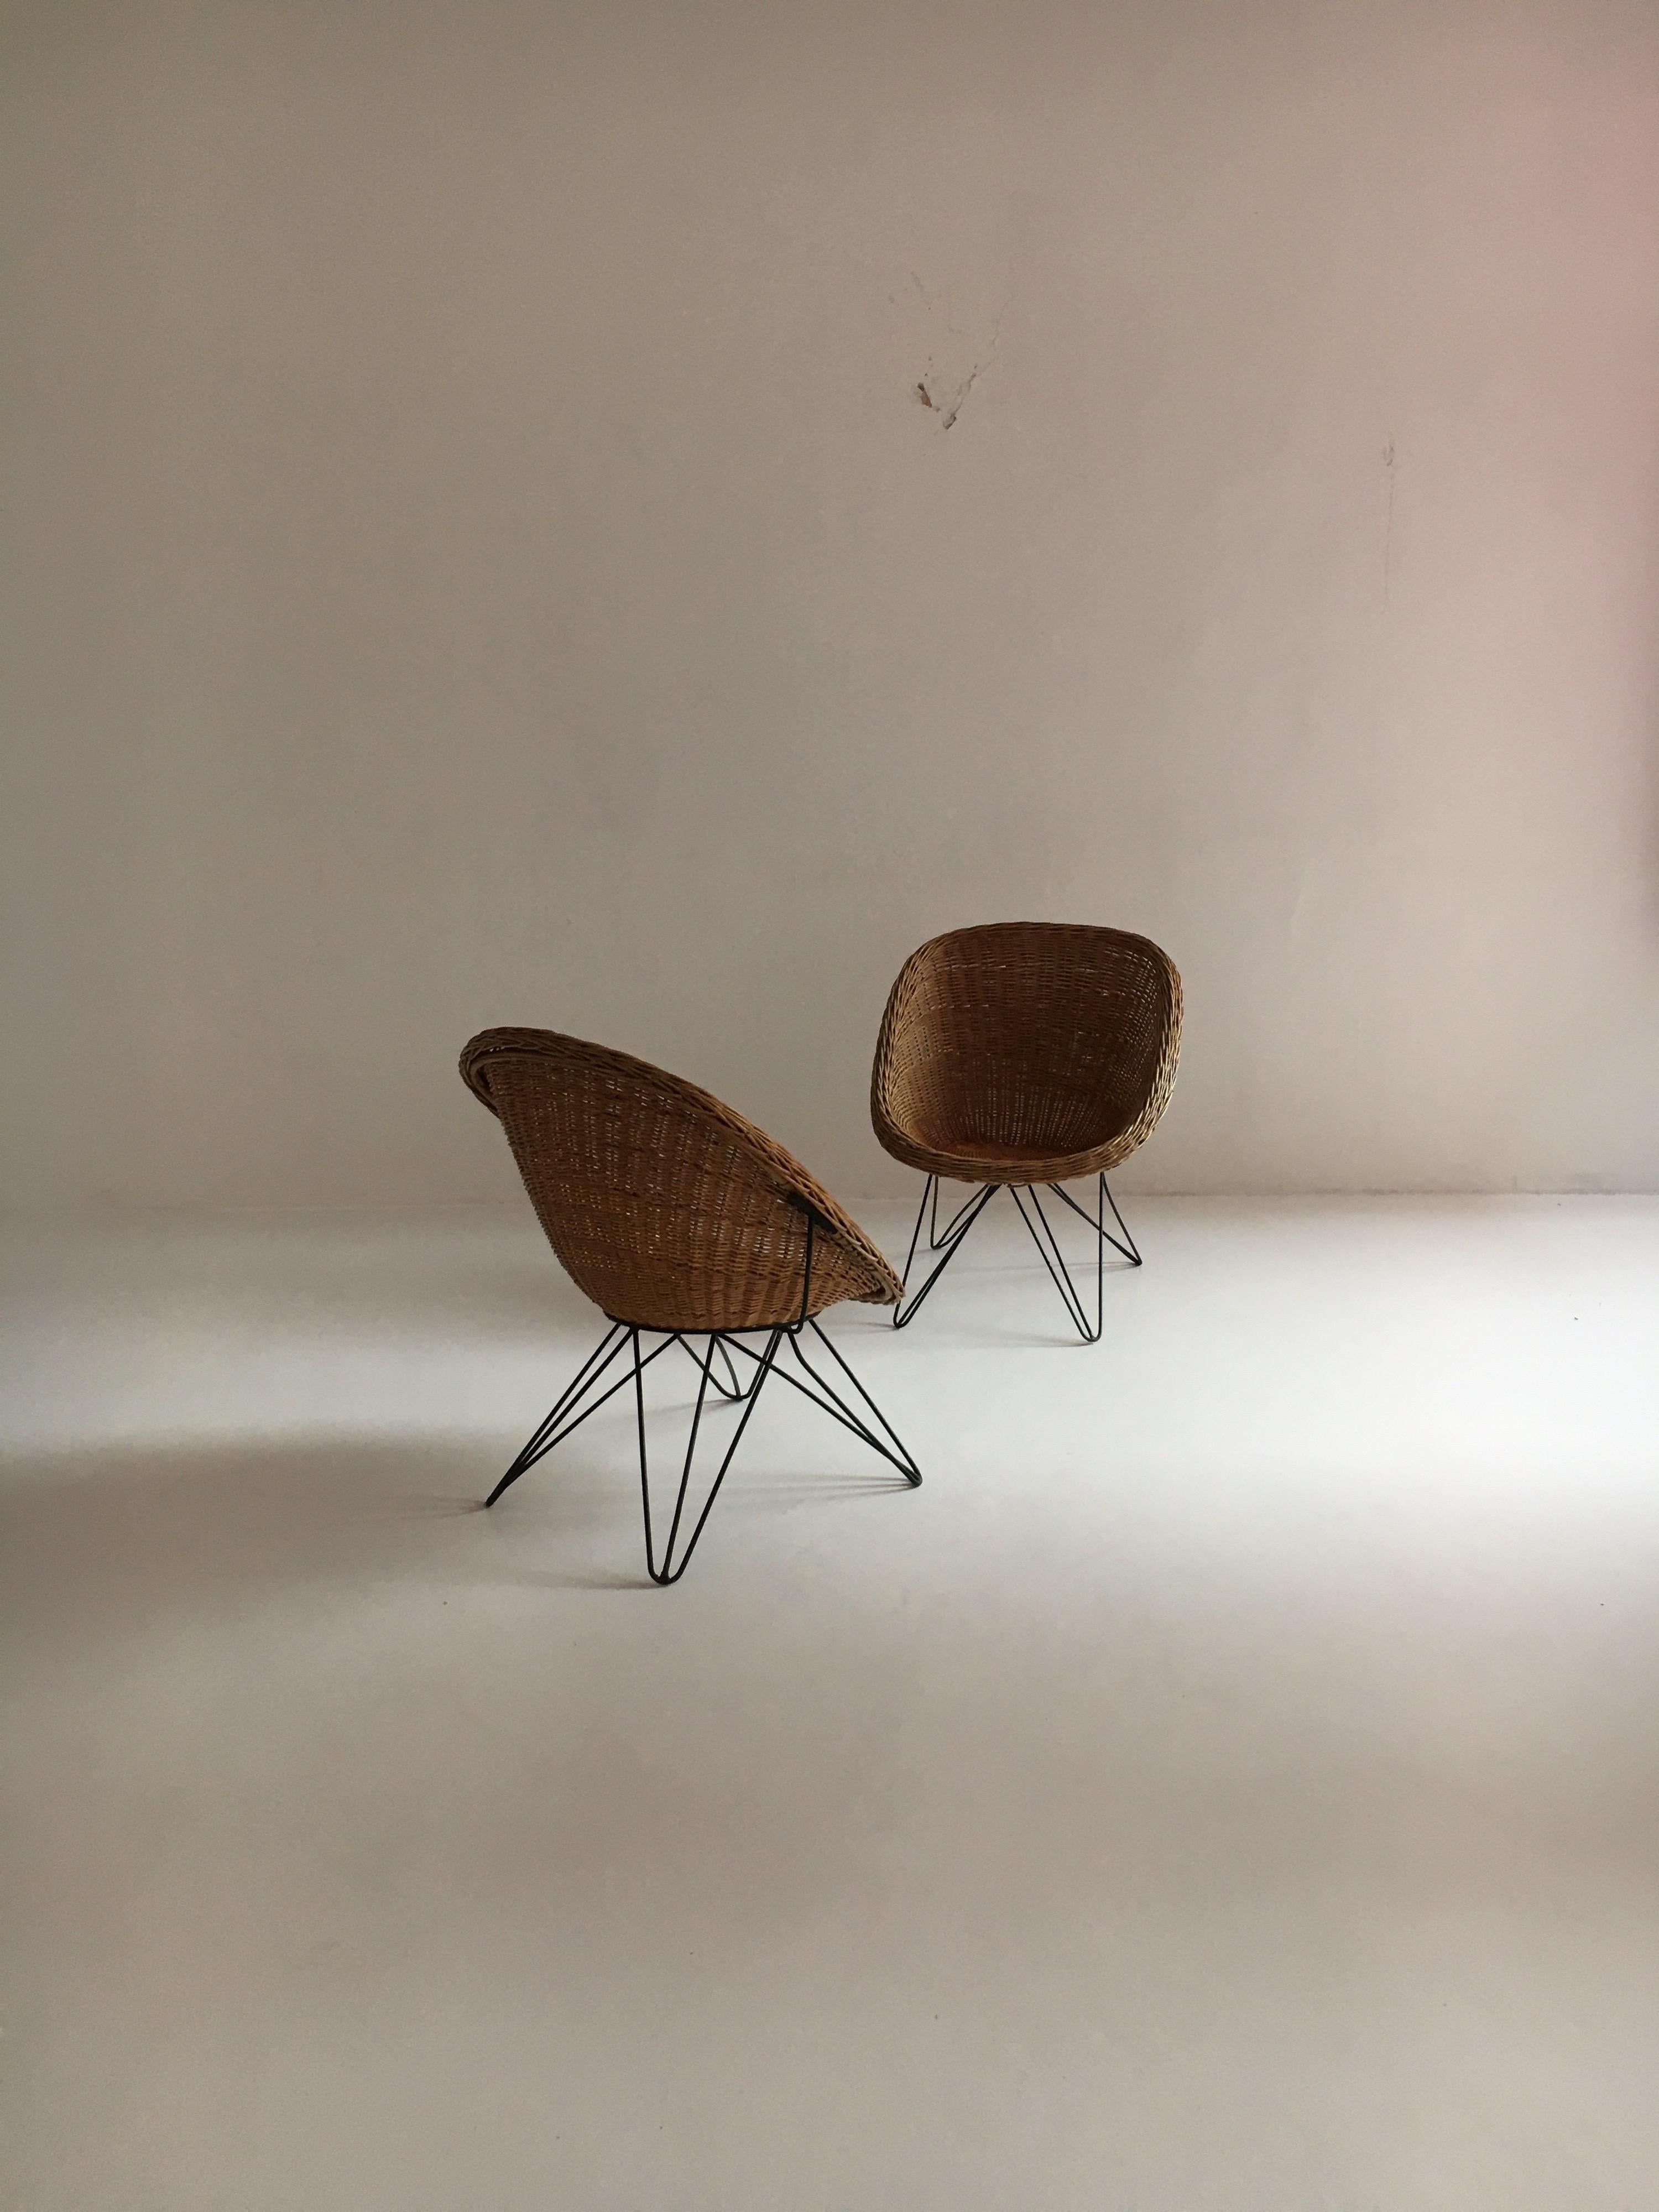 Mid-20th Century Mid-Century Modern Wicker Basket Chairs Hairpin Legs, Austria, 1950s